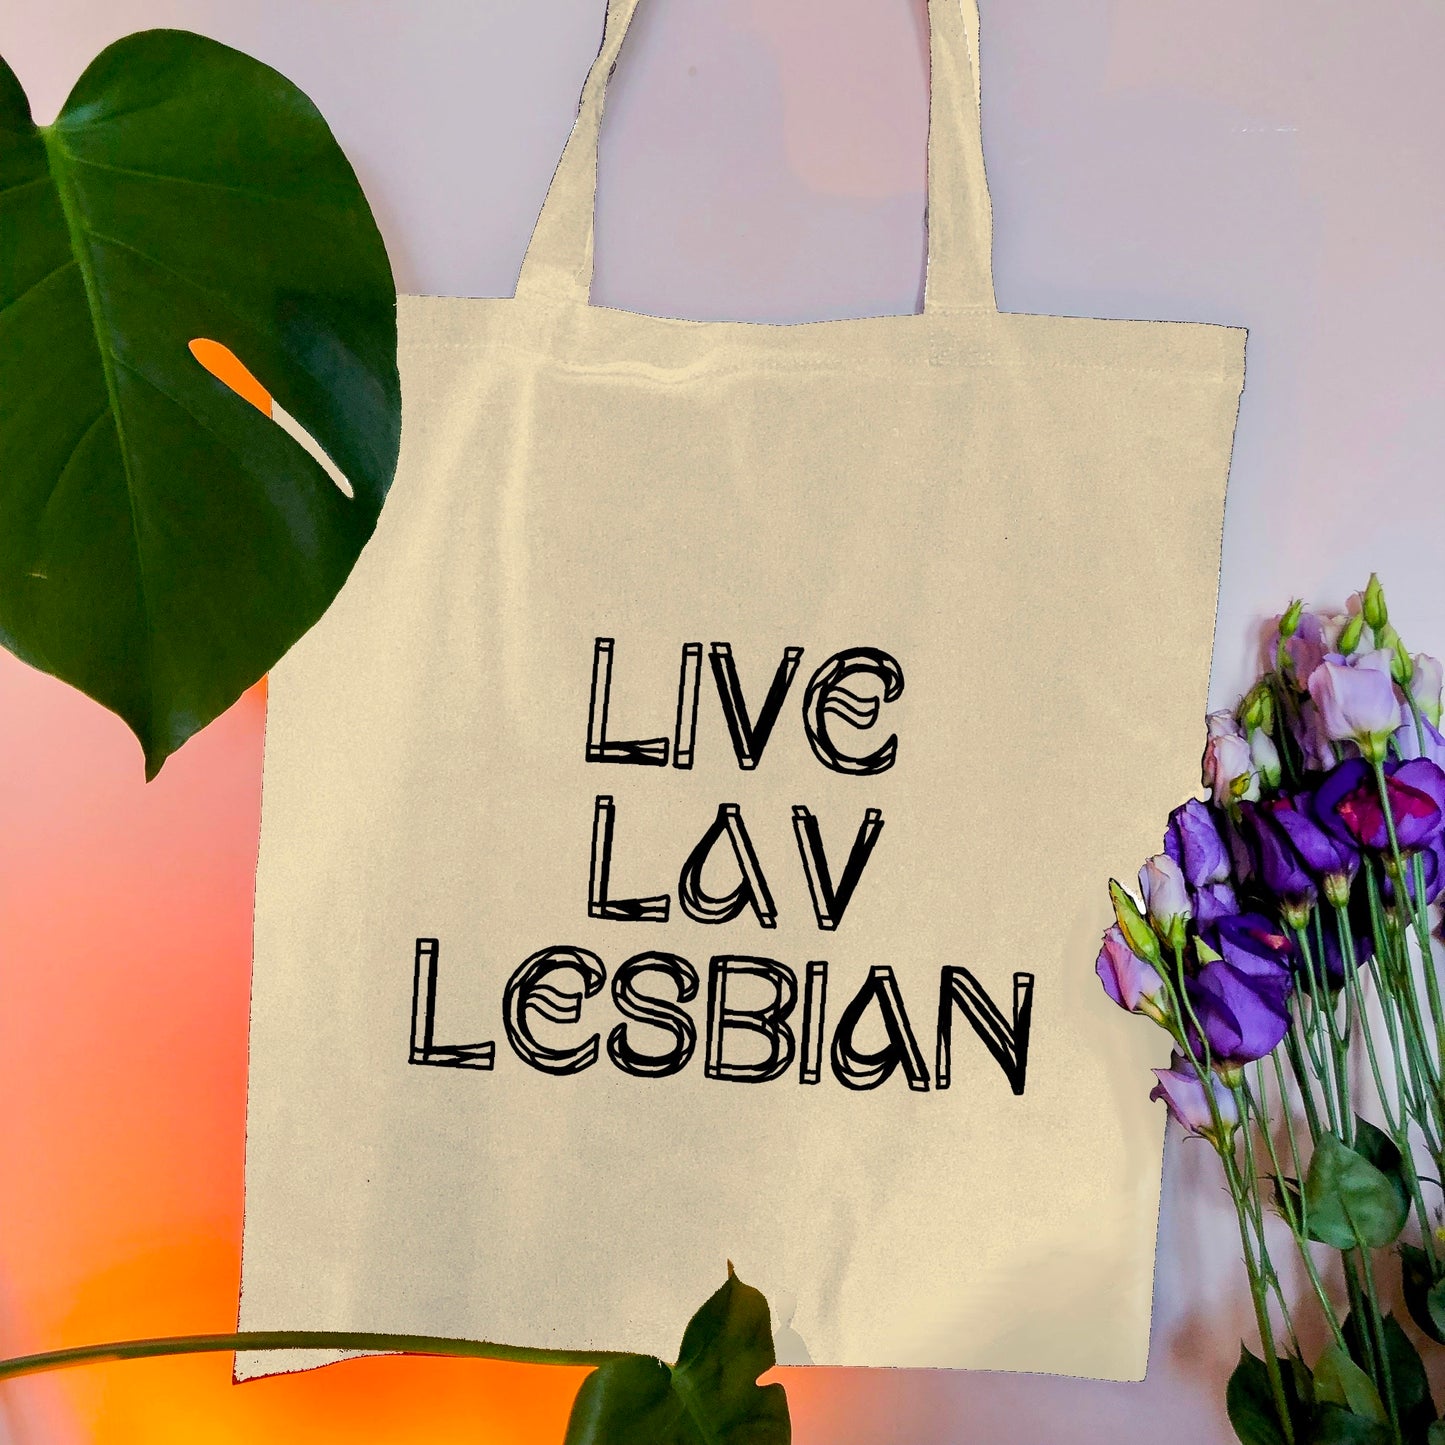 Live Lav Lesbian, Beige tote bag with black vinyl text. Leftbians Collab with Lavender Rodriguez